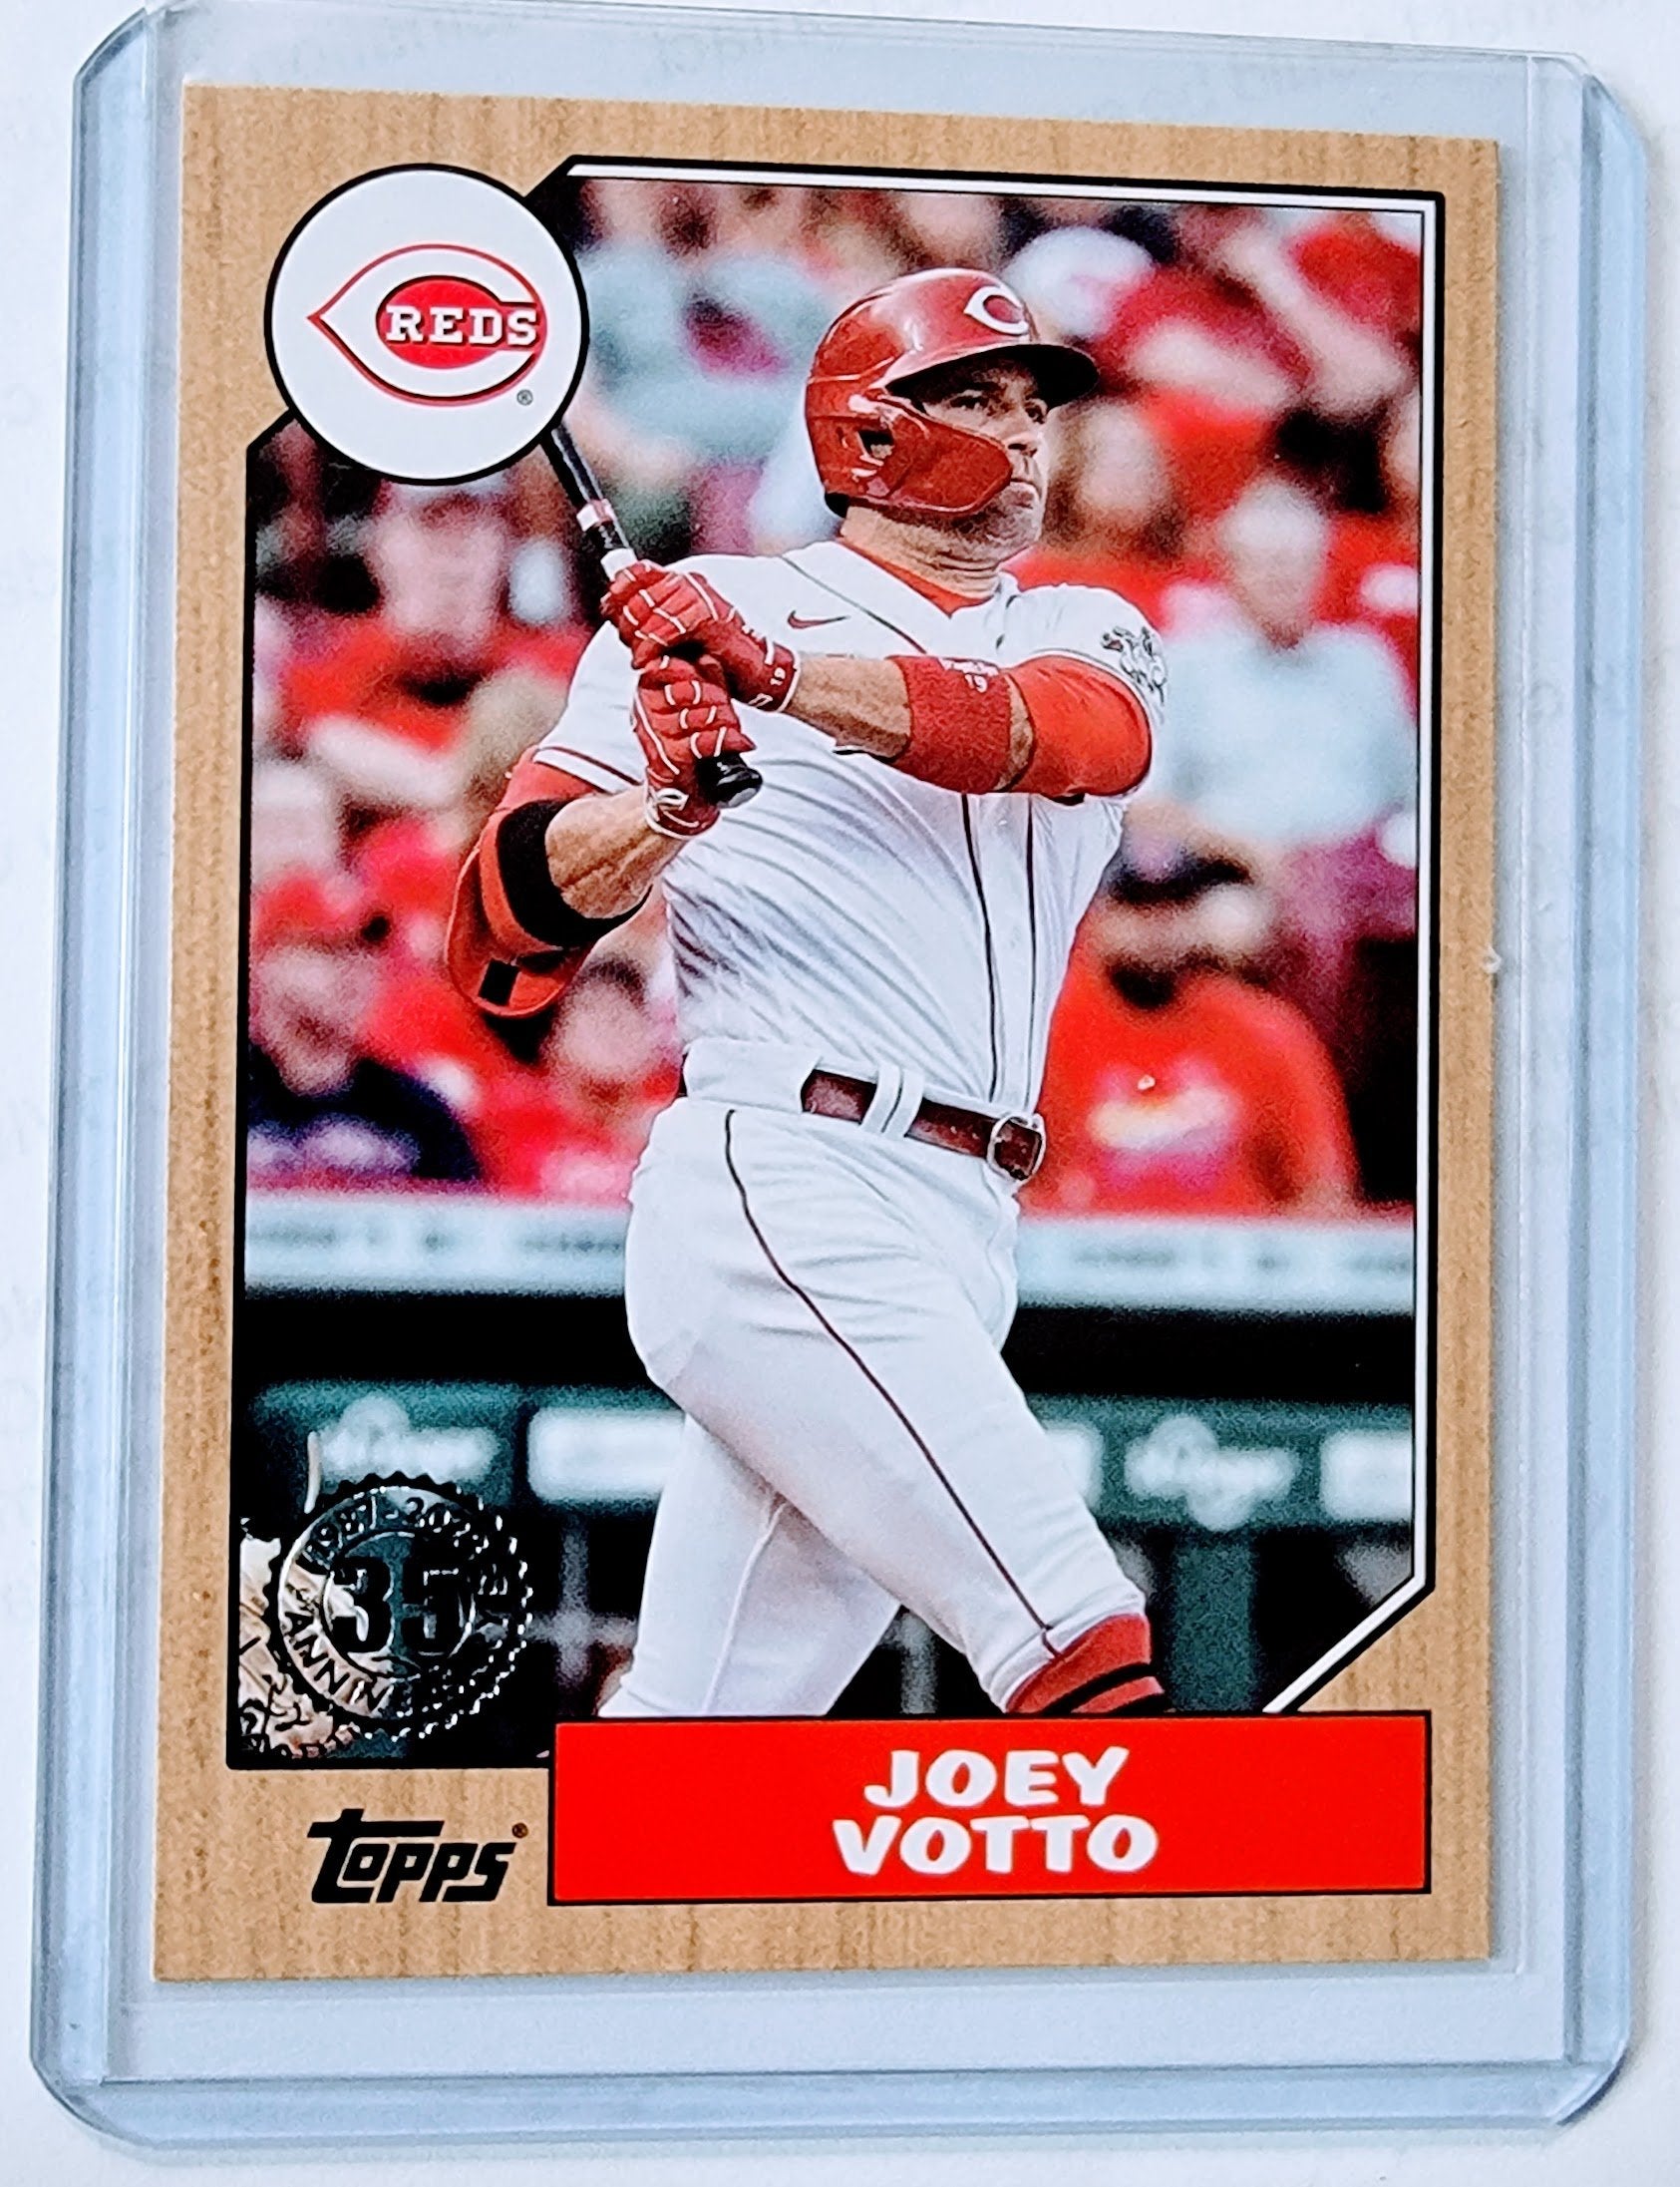 2022 Topps Joey Votto 1987 35th Anniversary Baseball Trading Card